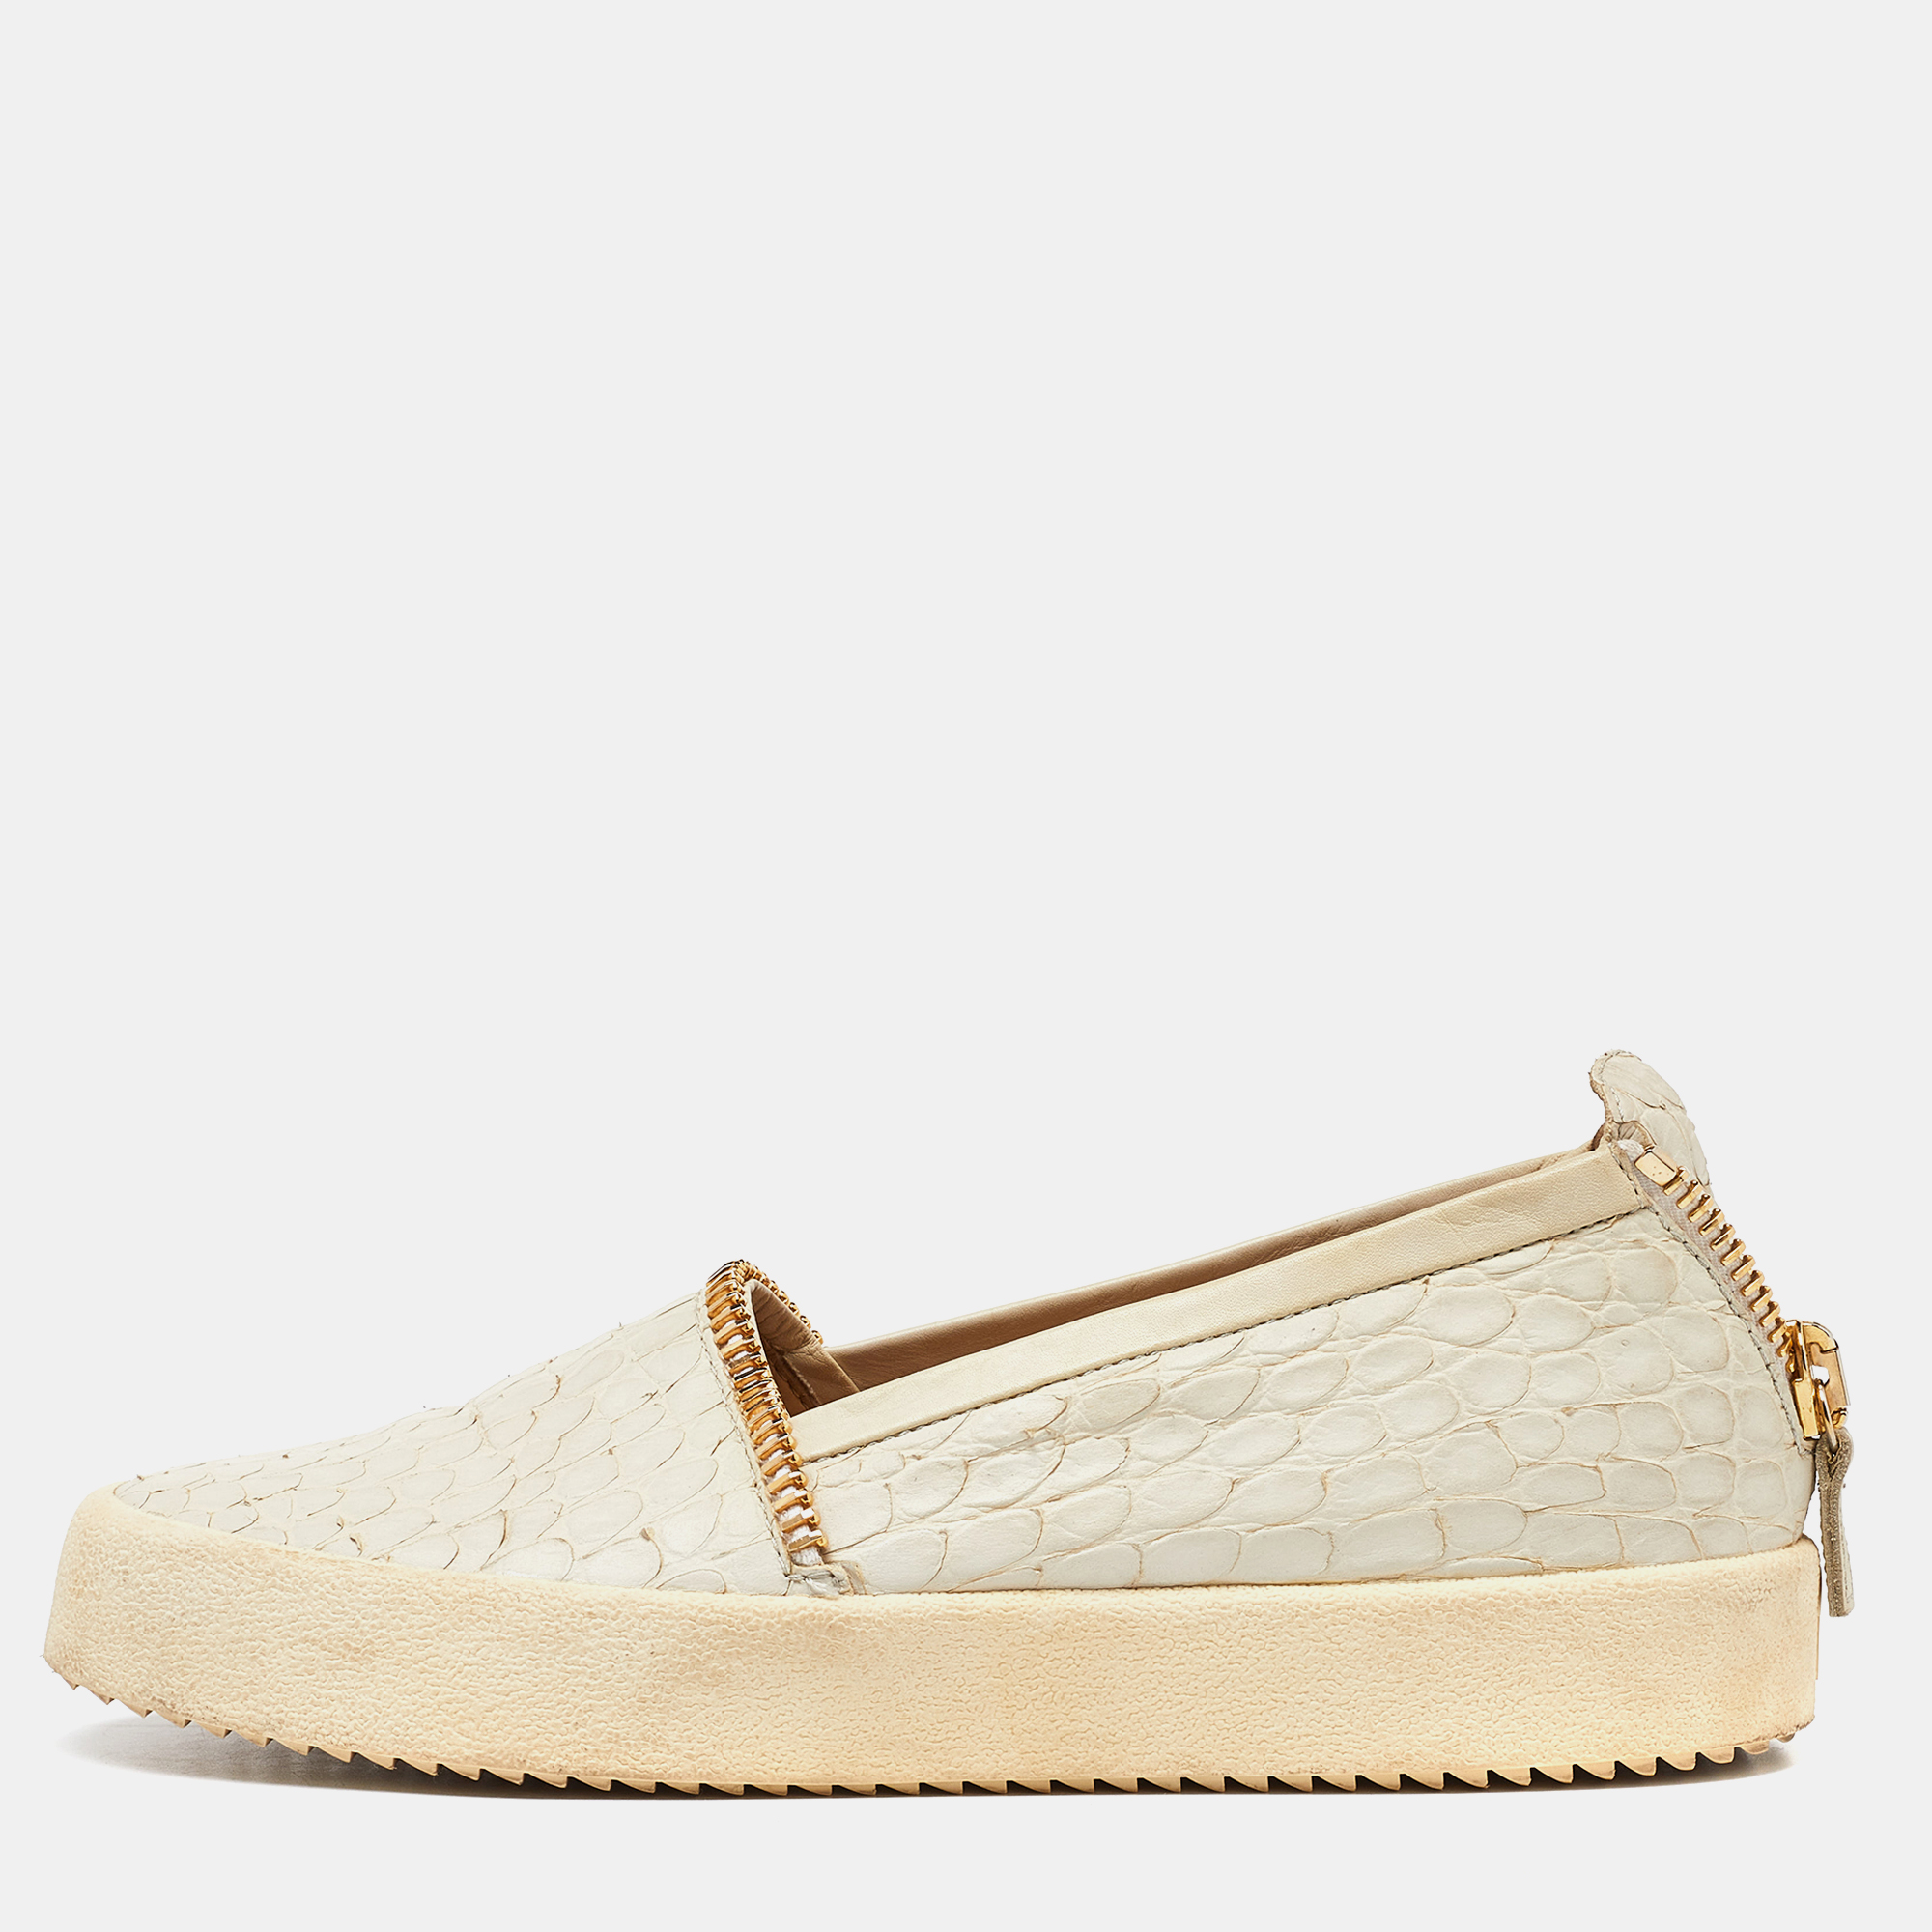 Giuseppe zanotti cream croc embossed leather slip-on sneakers size 40